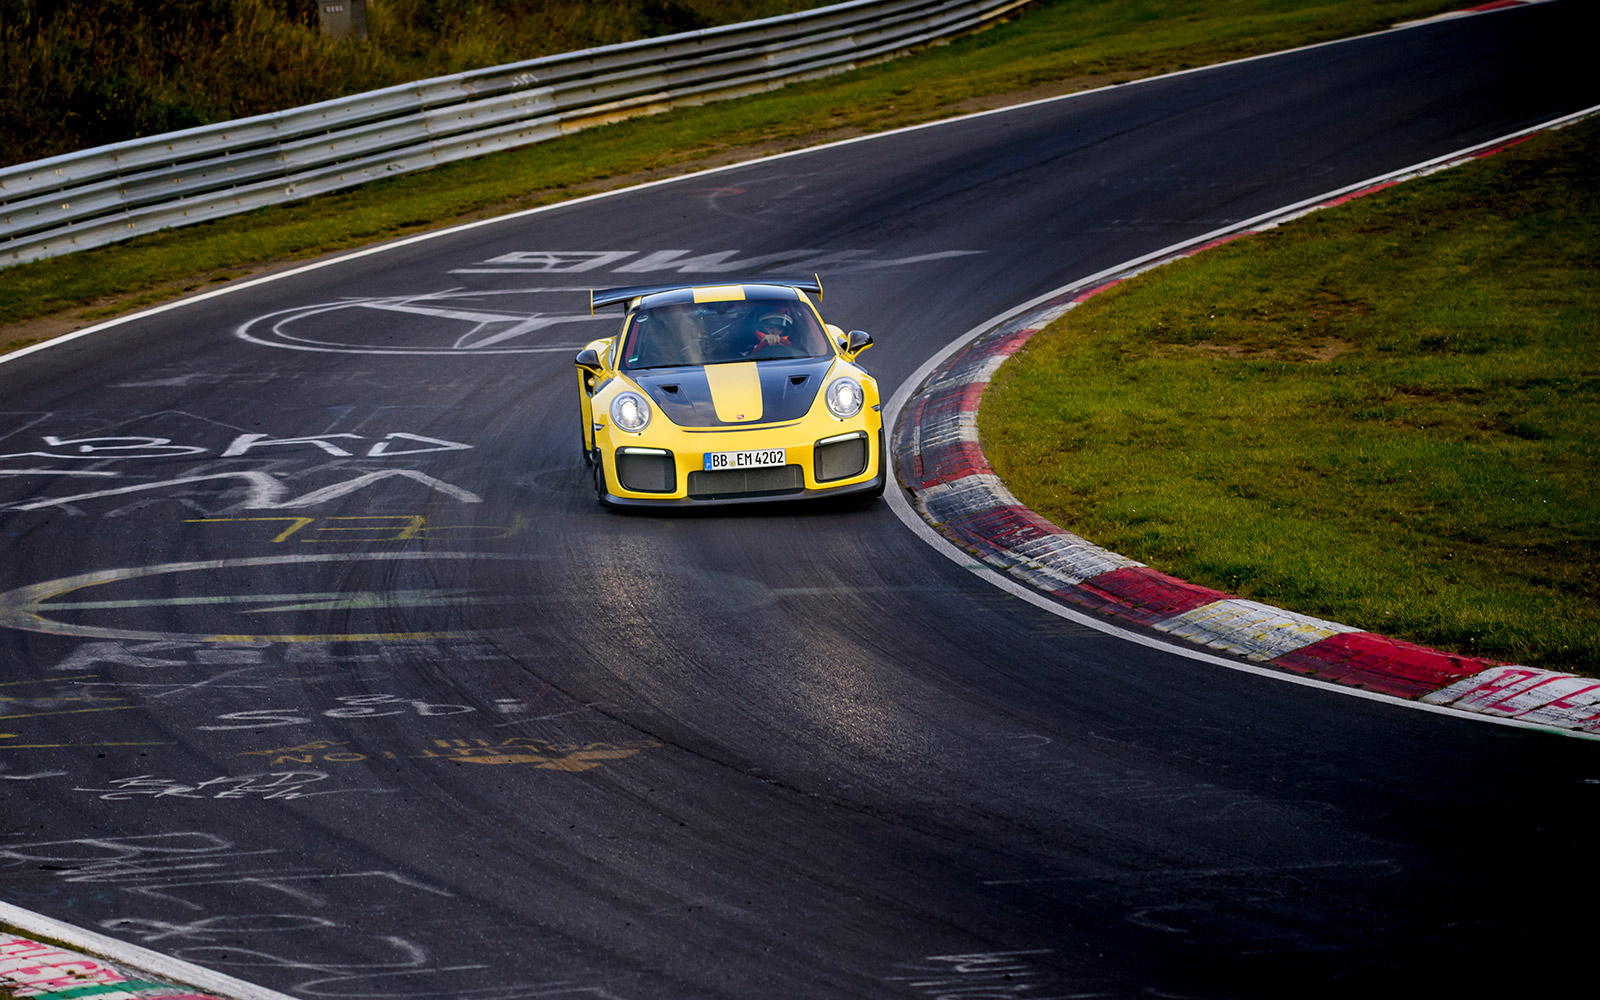 Porsche-911-GT2-RS-Nurburgring-record-lap-516